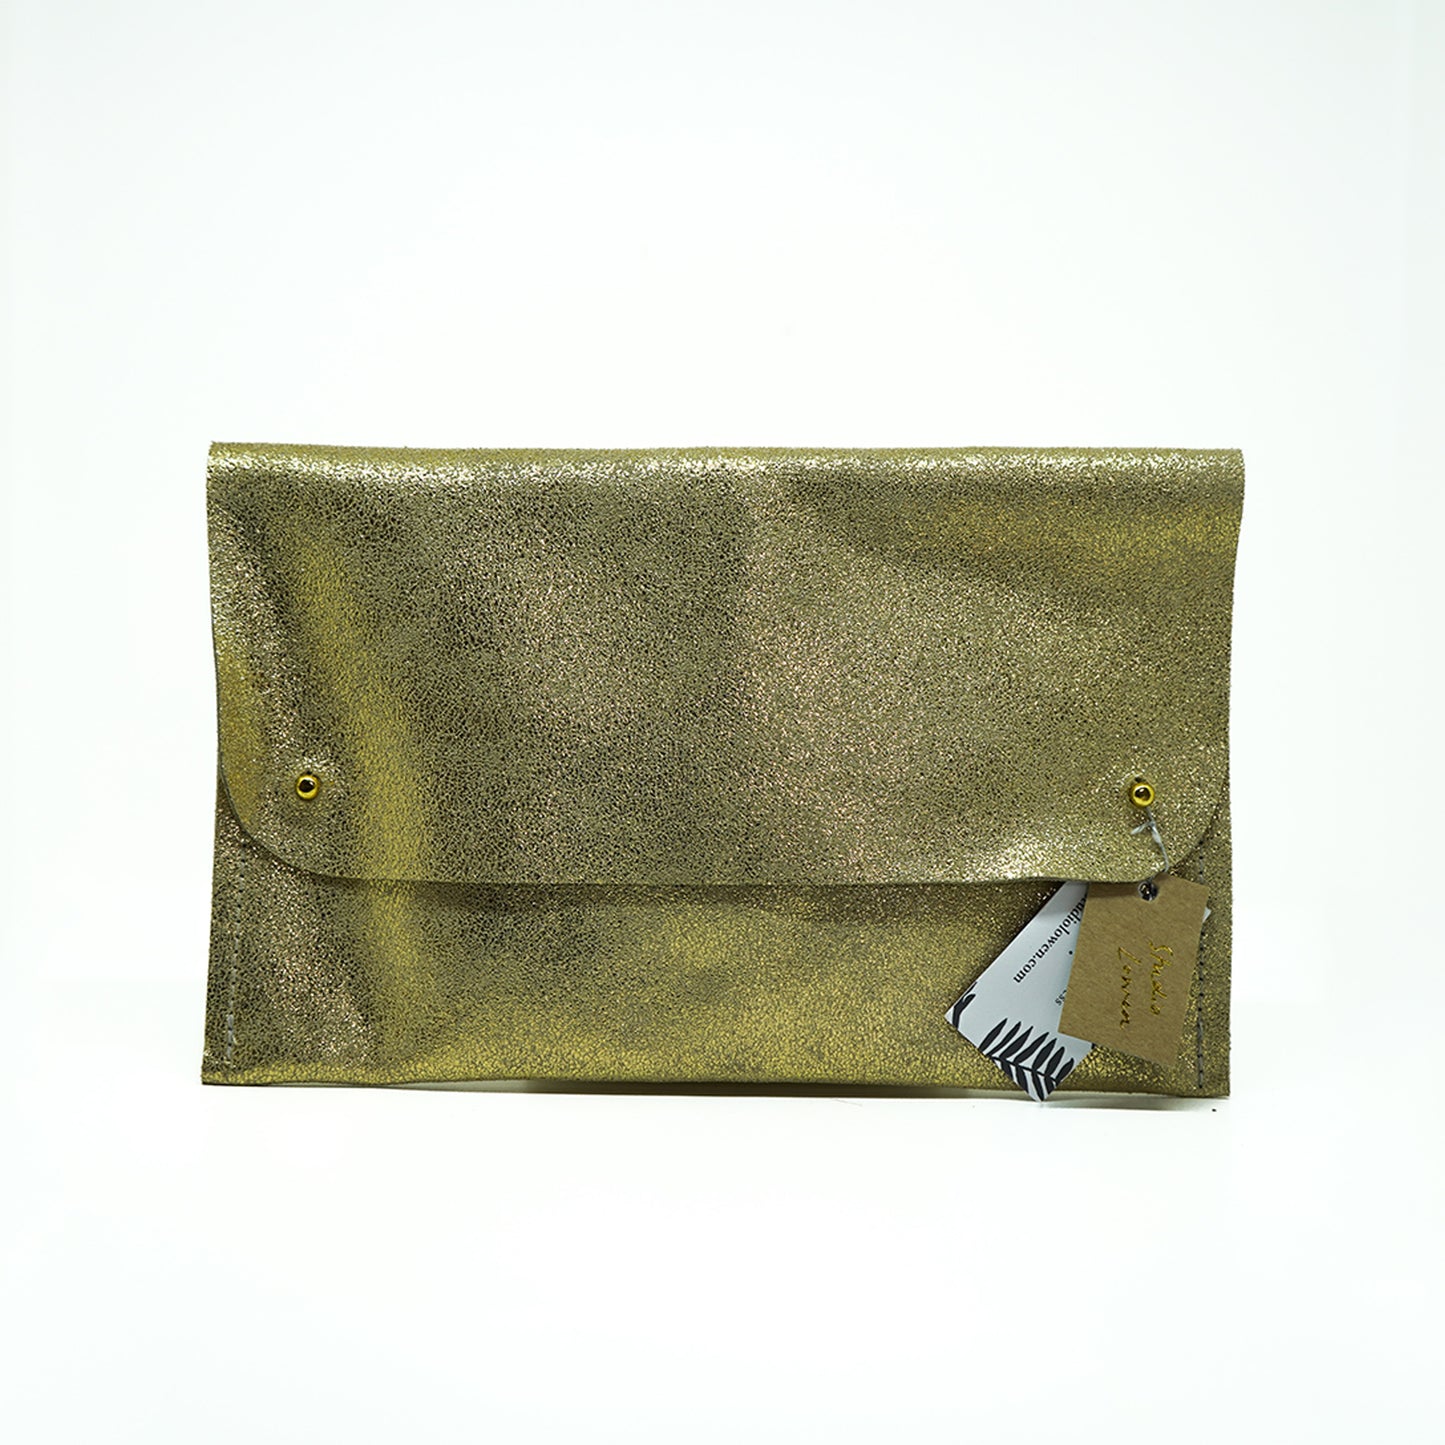 Studio Lowen Gold Leather Clutch Bag